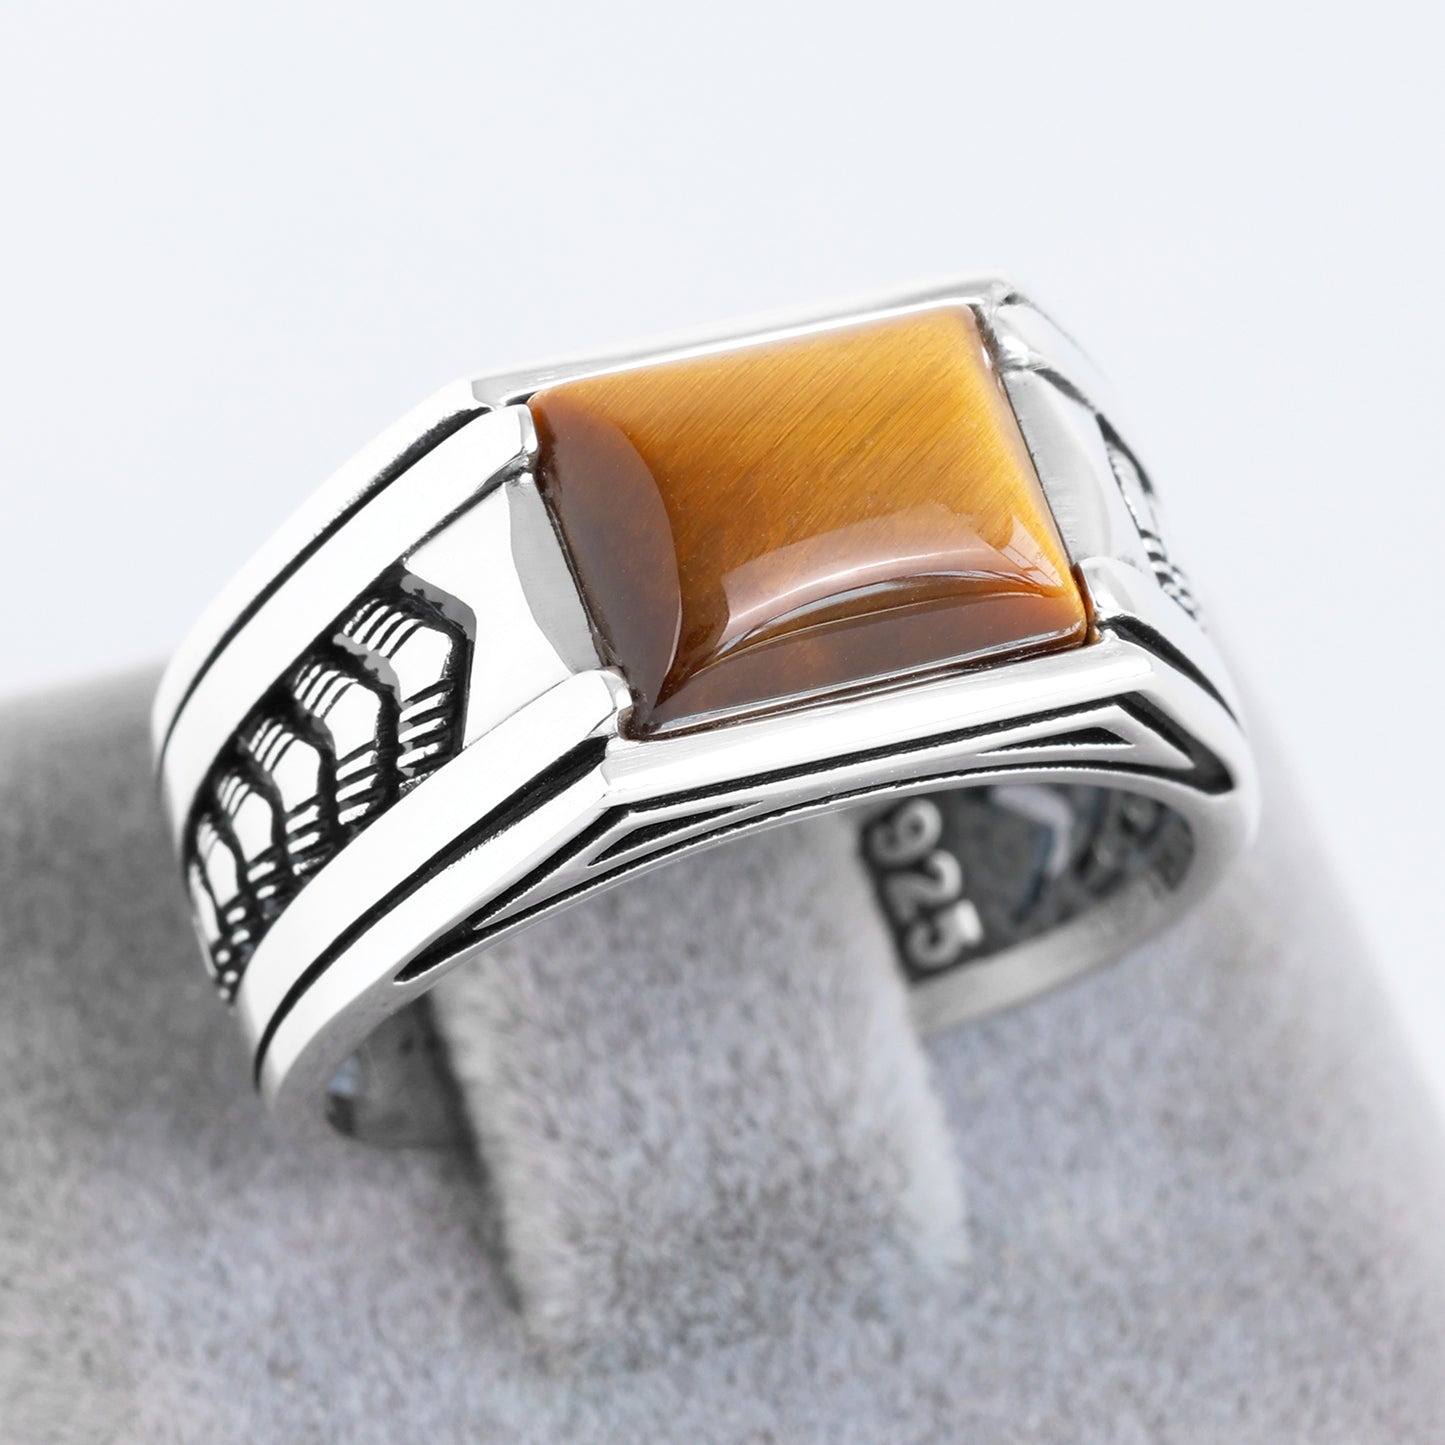 Chimoda Arrow Pattern Sterling Silver Ring for Men Tiger Eye Stone